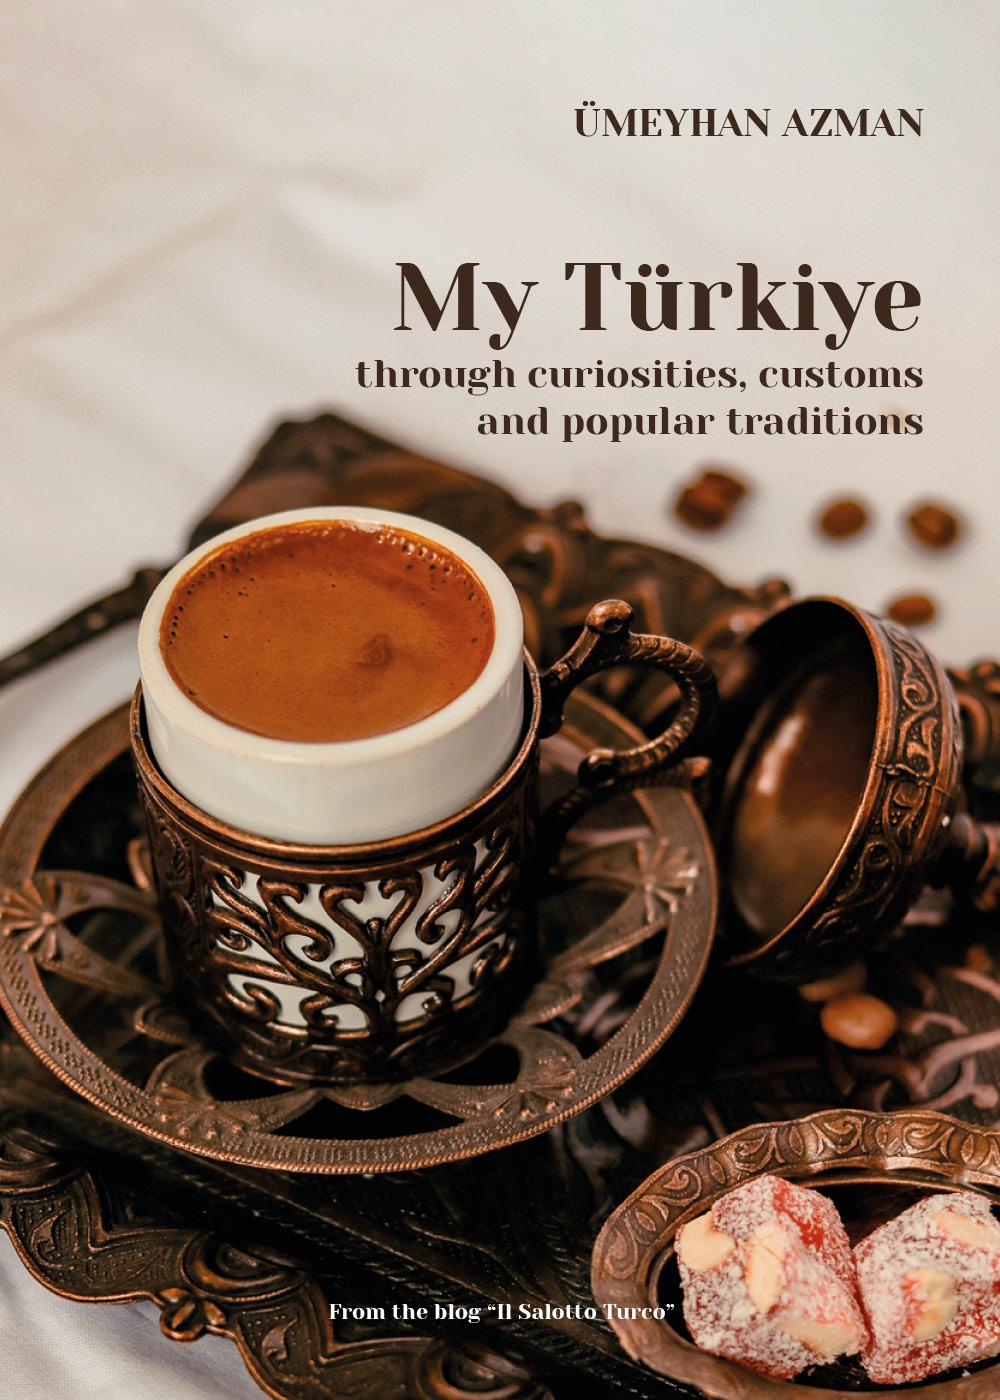 My Türkiye (Turkey) through curiosities, customs and popular traditions